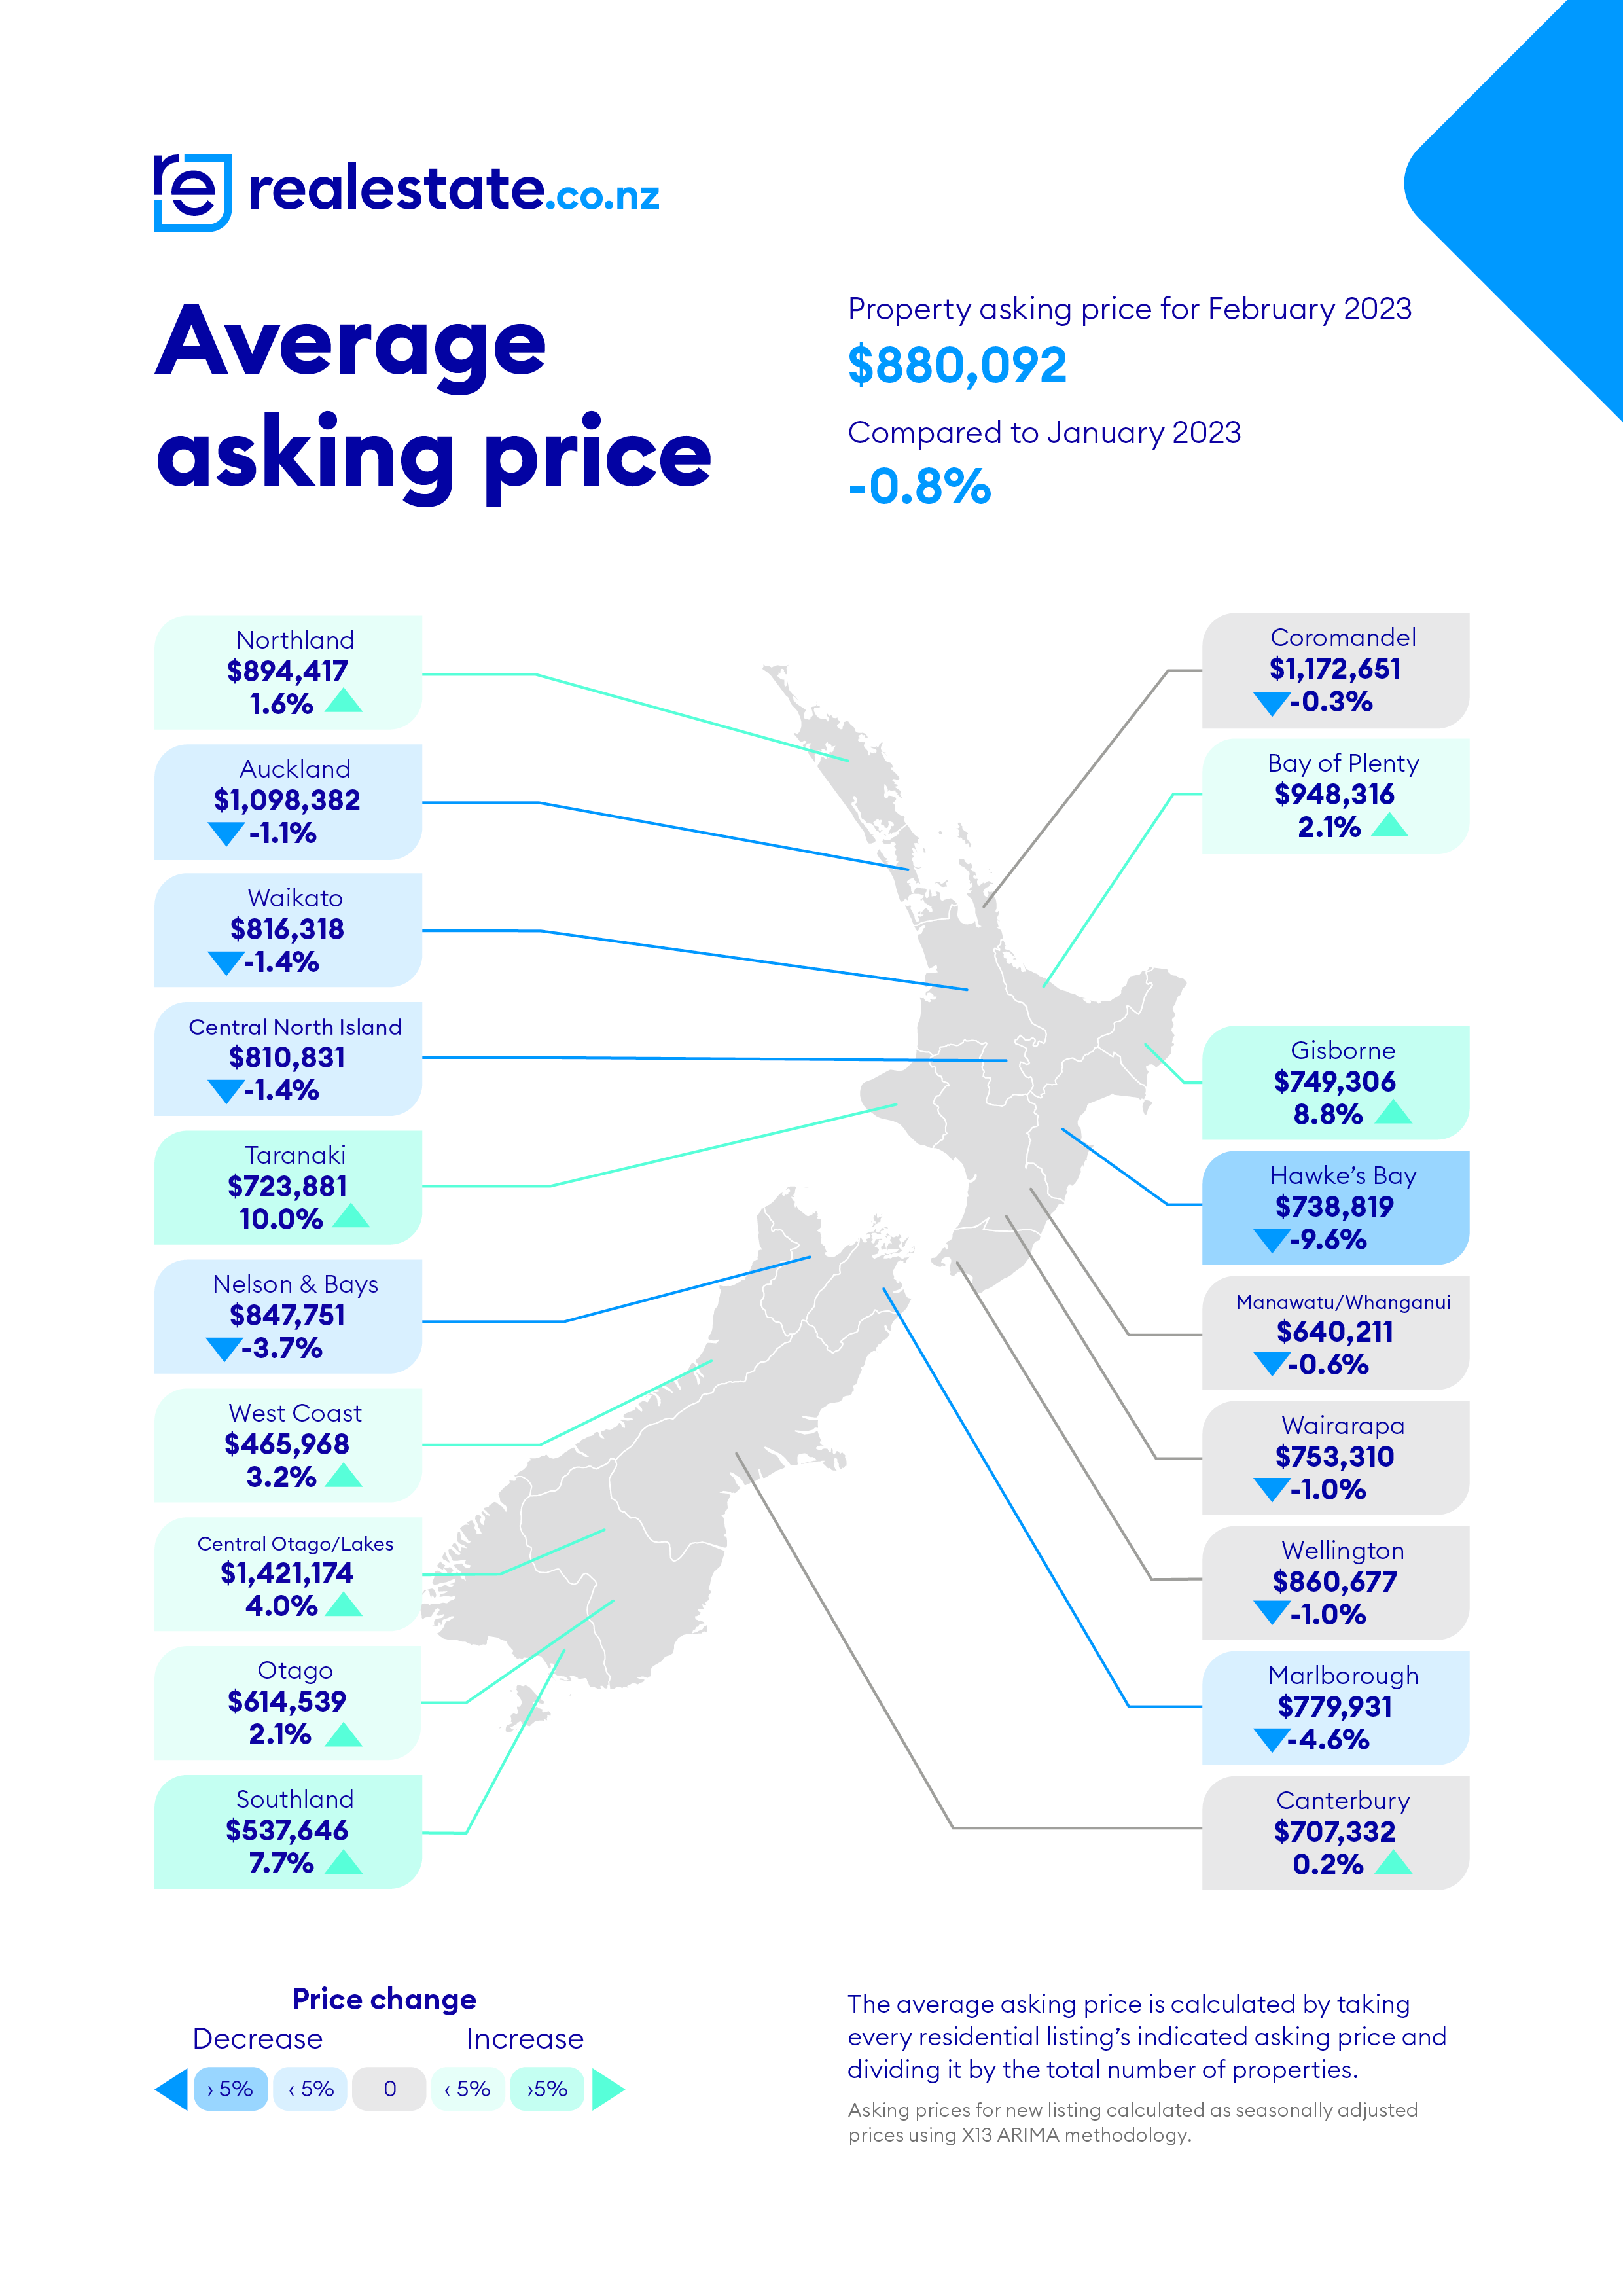 Average Asking Price realestate.co.nz Feb 23